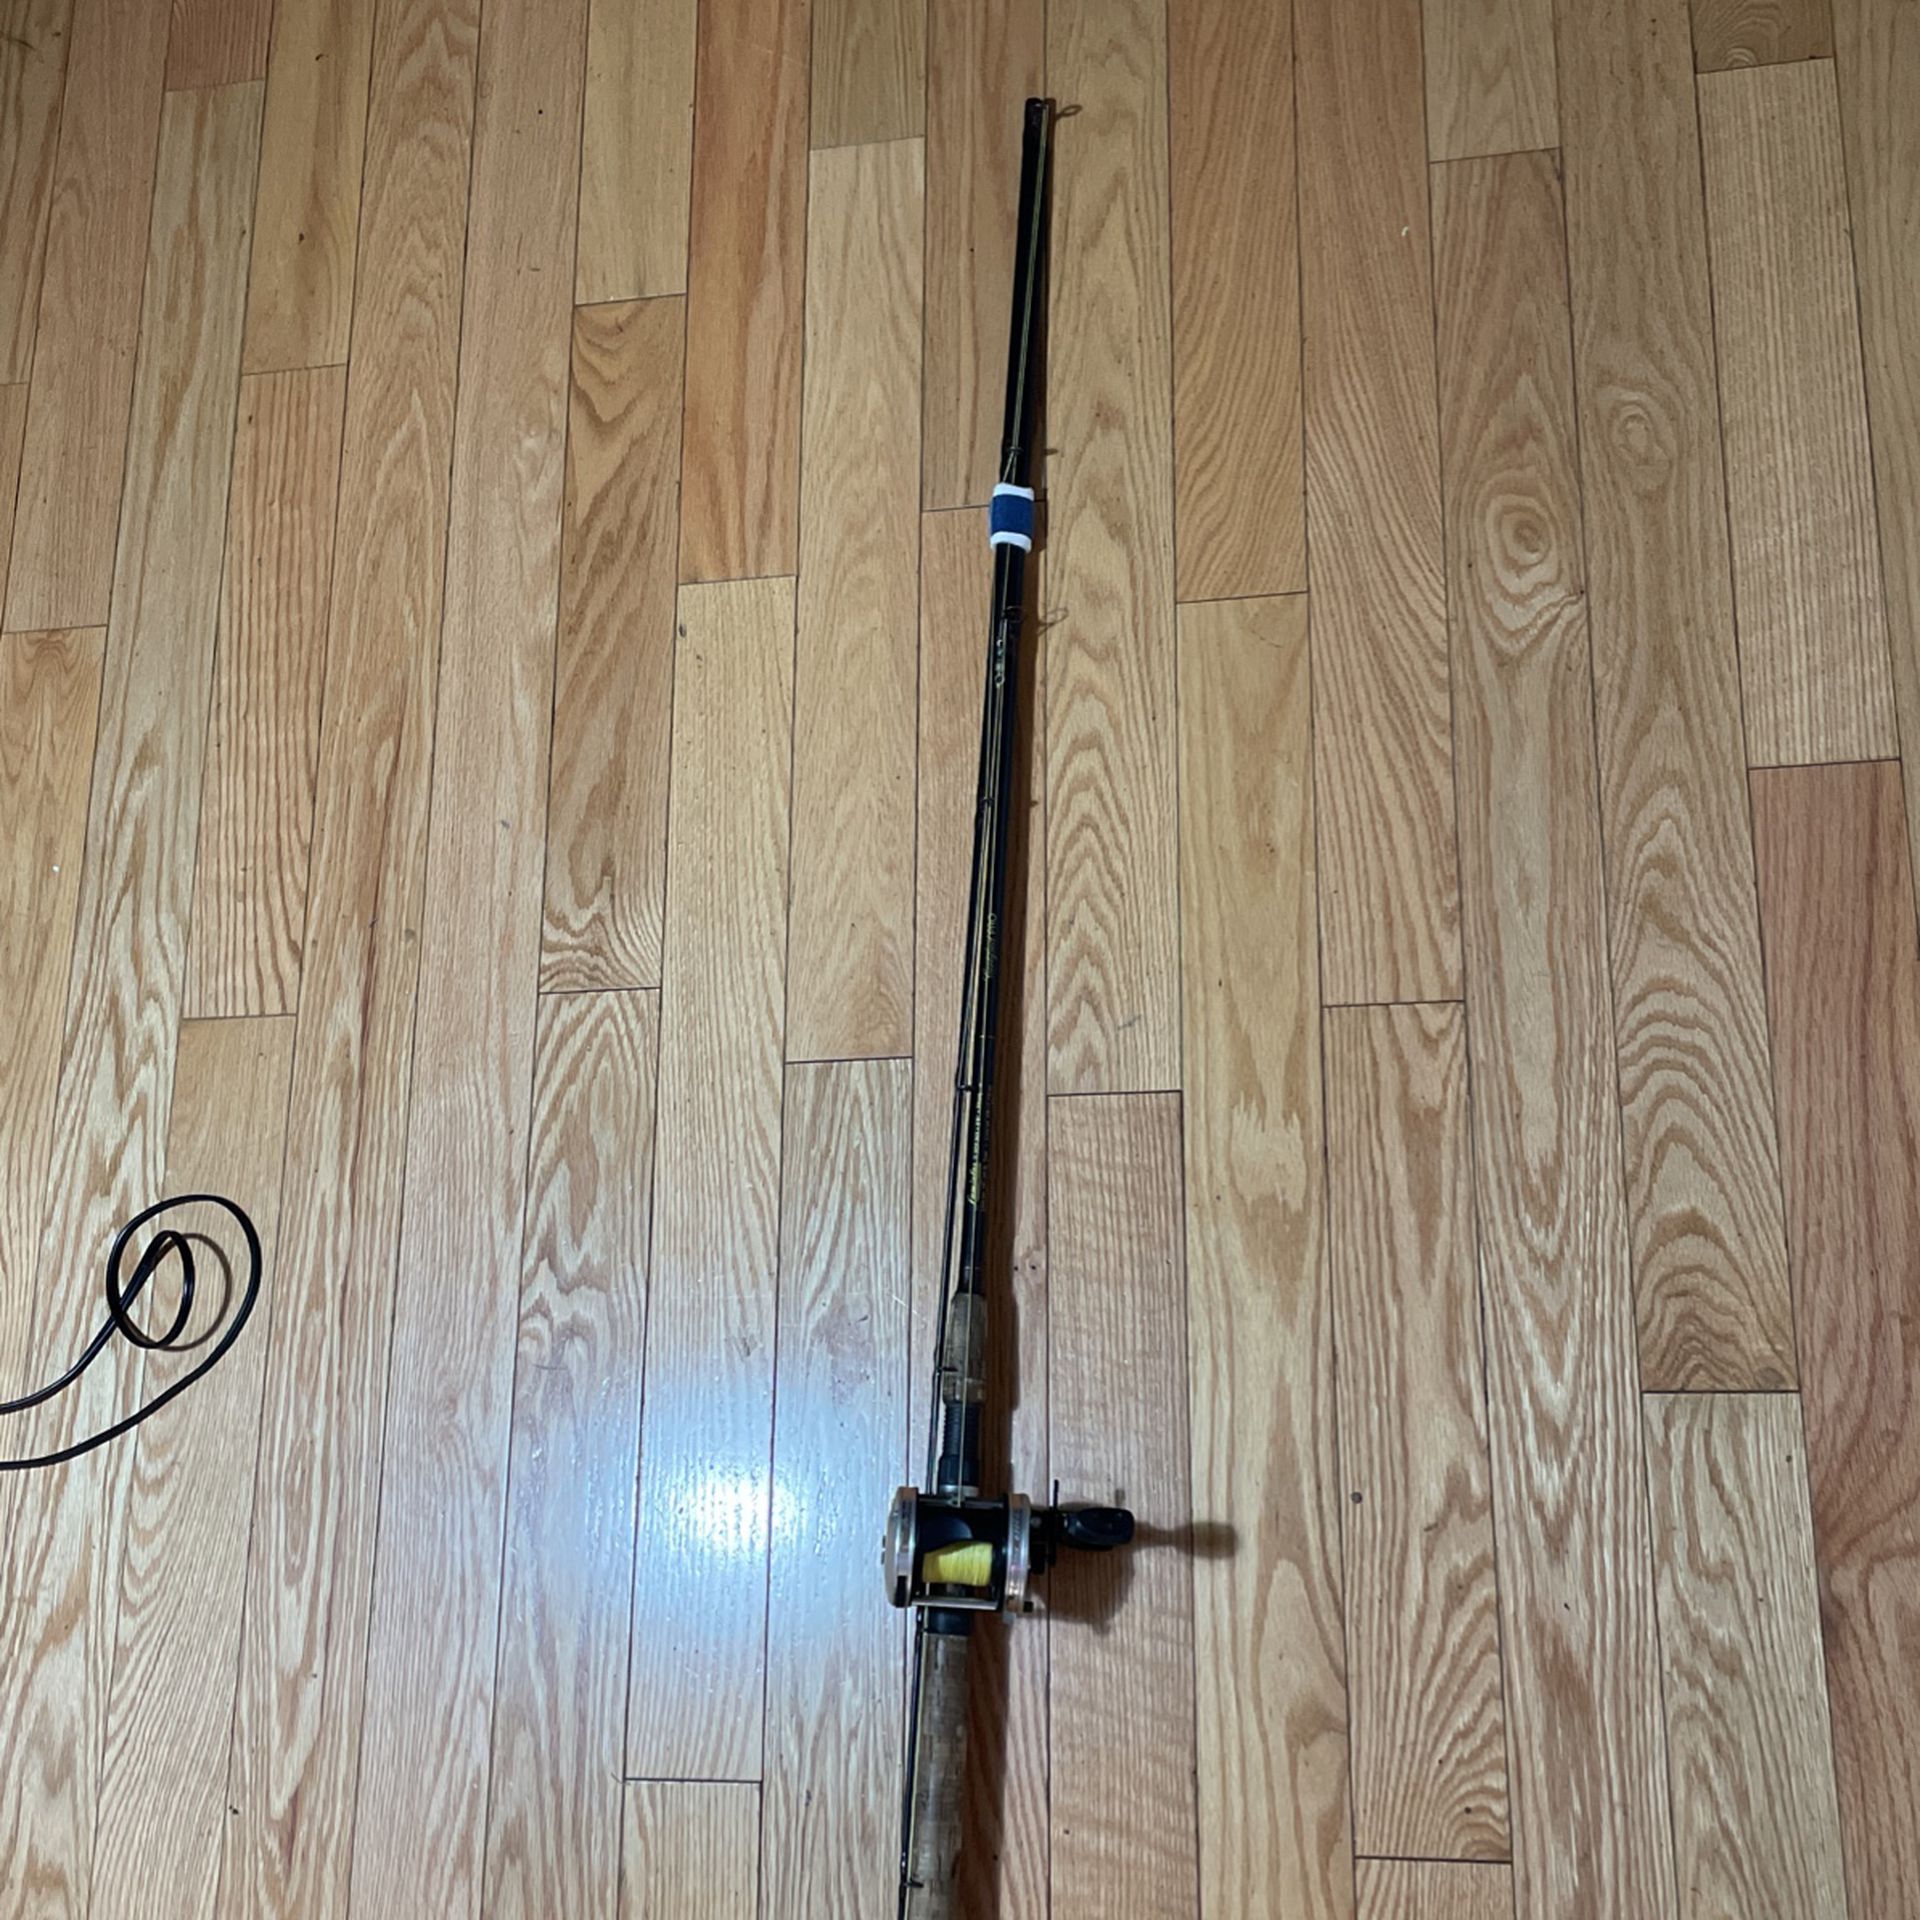 Lamisglas 8”6 Fishing rod and Free reel